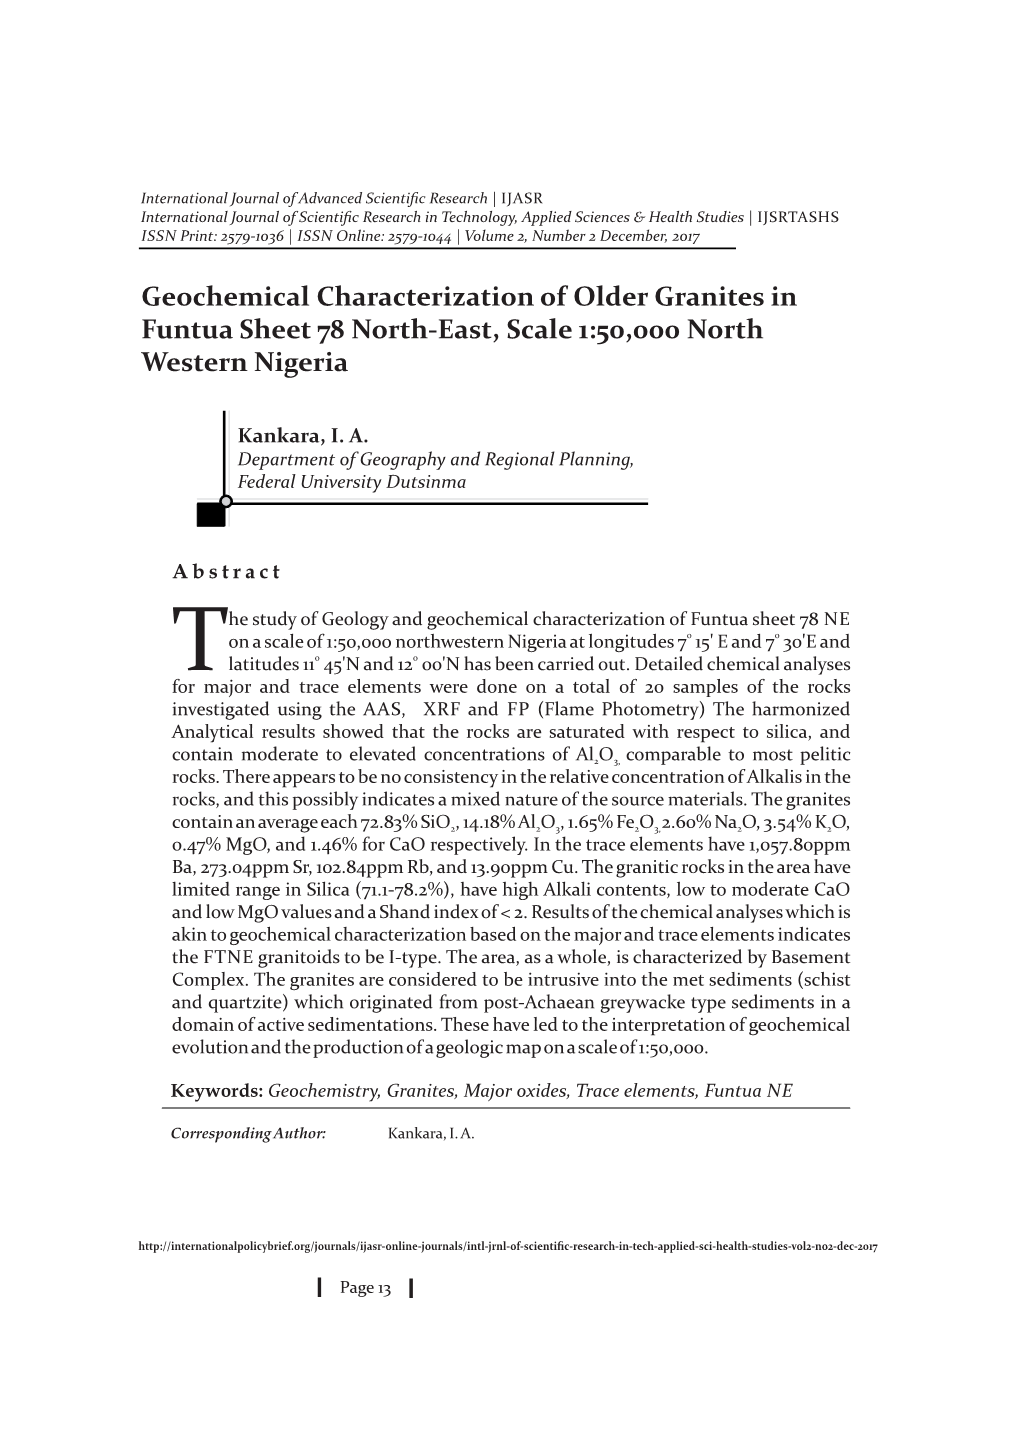 Geochemical Characterization of Older Granites in Funtua Sheet 78 North-East, Scale 1:50,000 North Western Nigeria